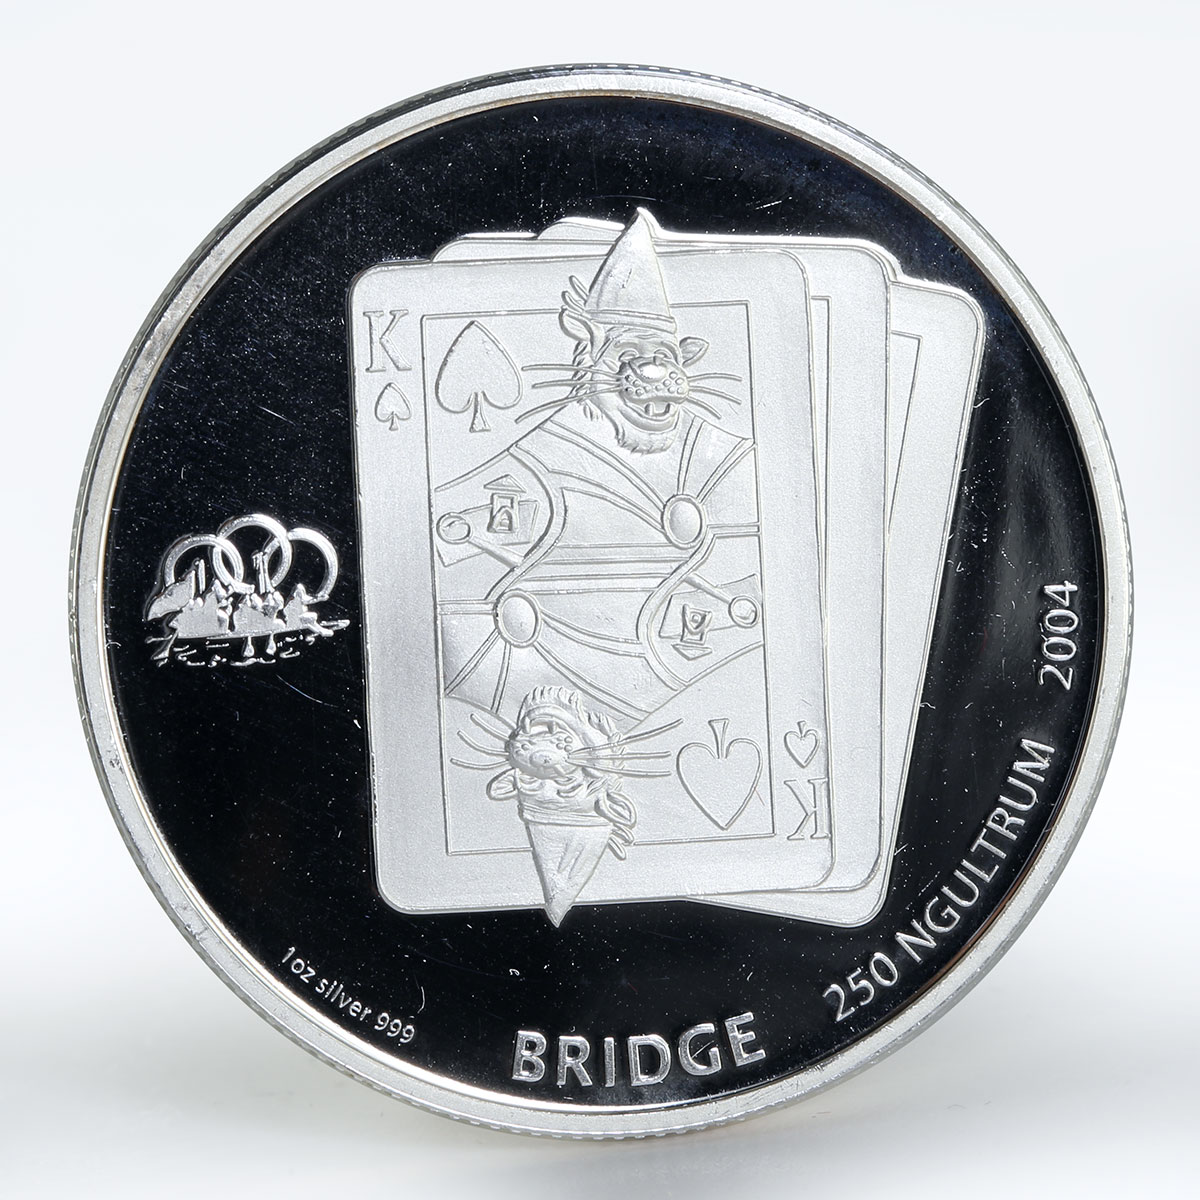 Bhutan 250 ngultrum Games Bridge card proof silver coin 2004